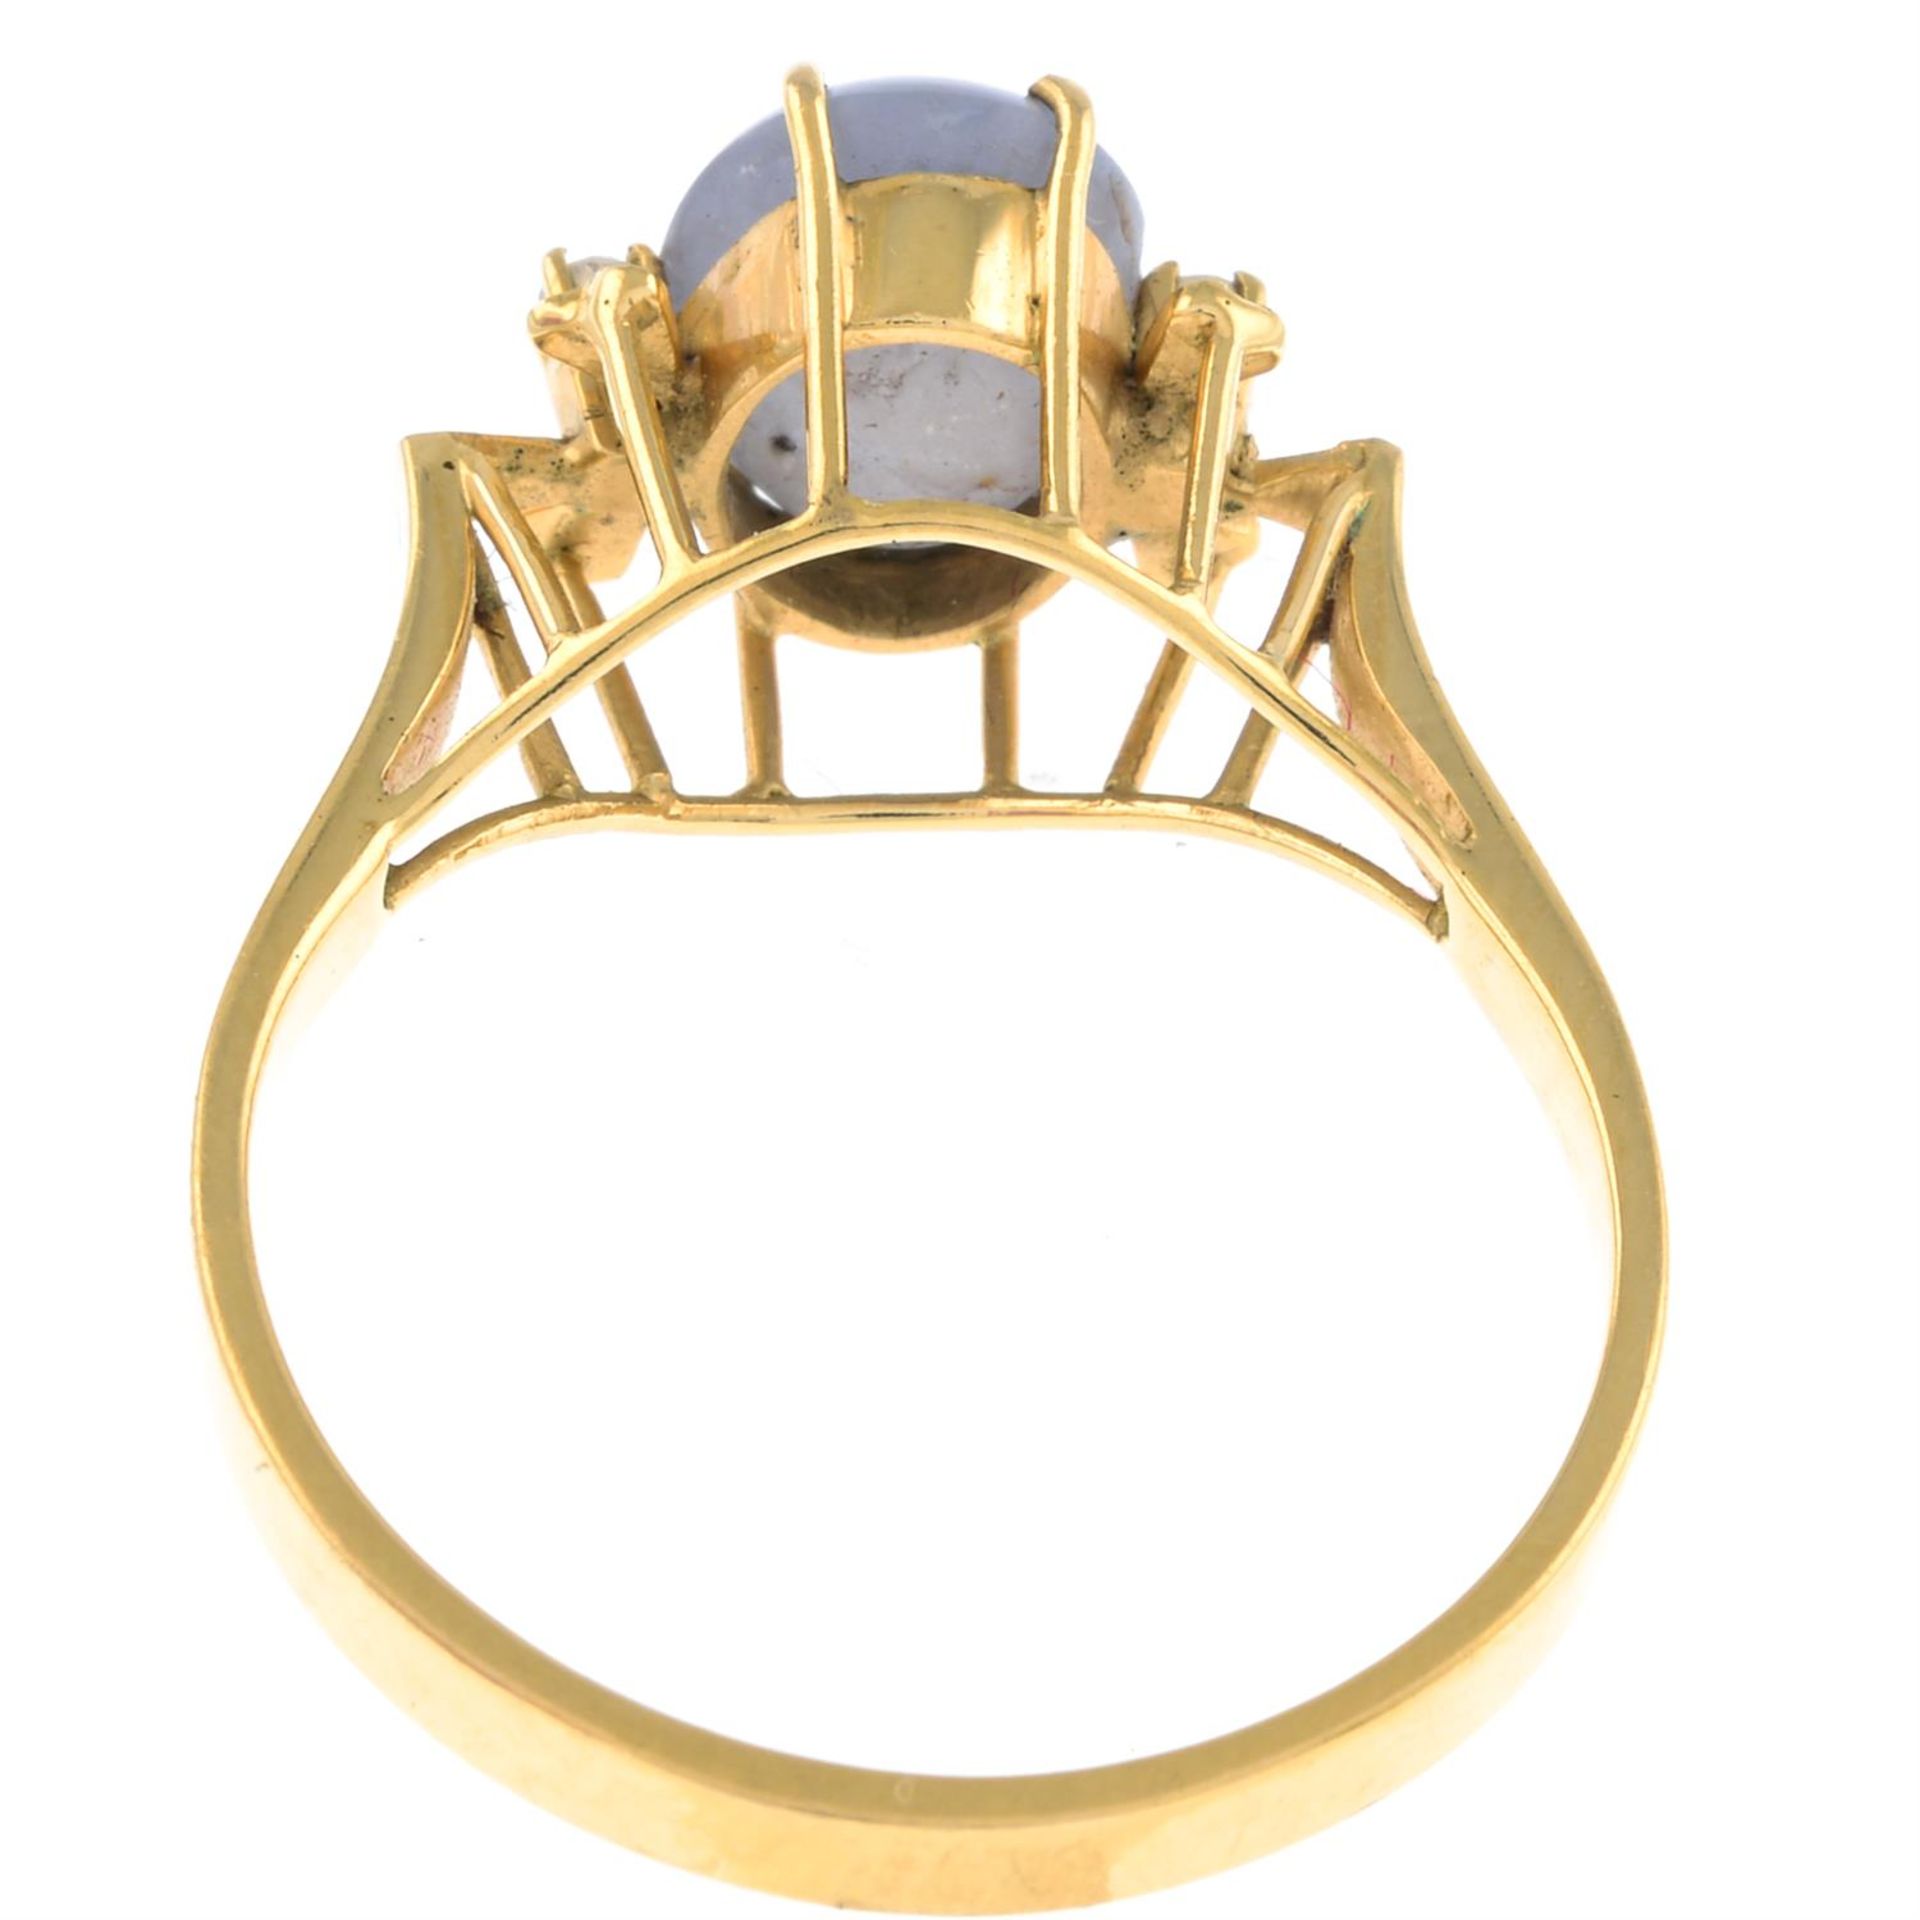 Star sapphire & diamond three-stone ring - Image 2 of 2